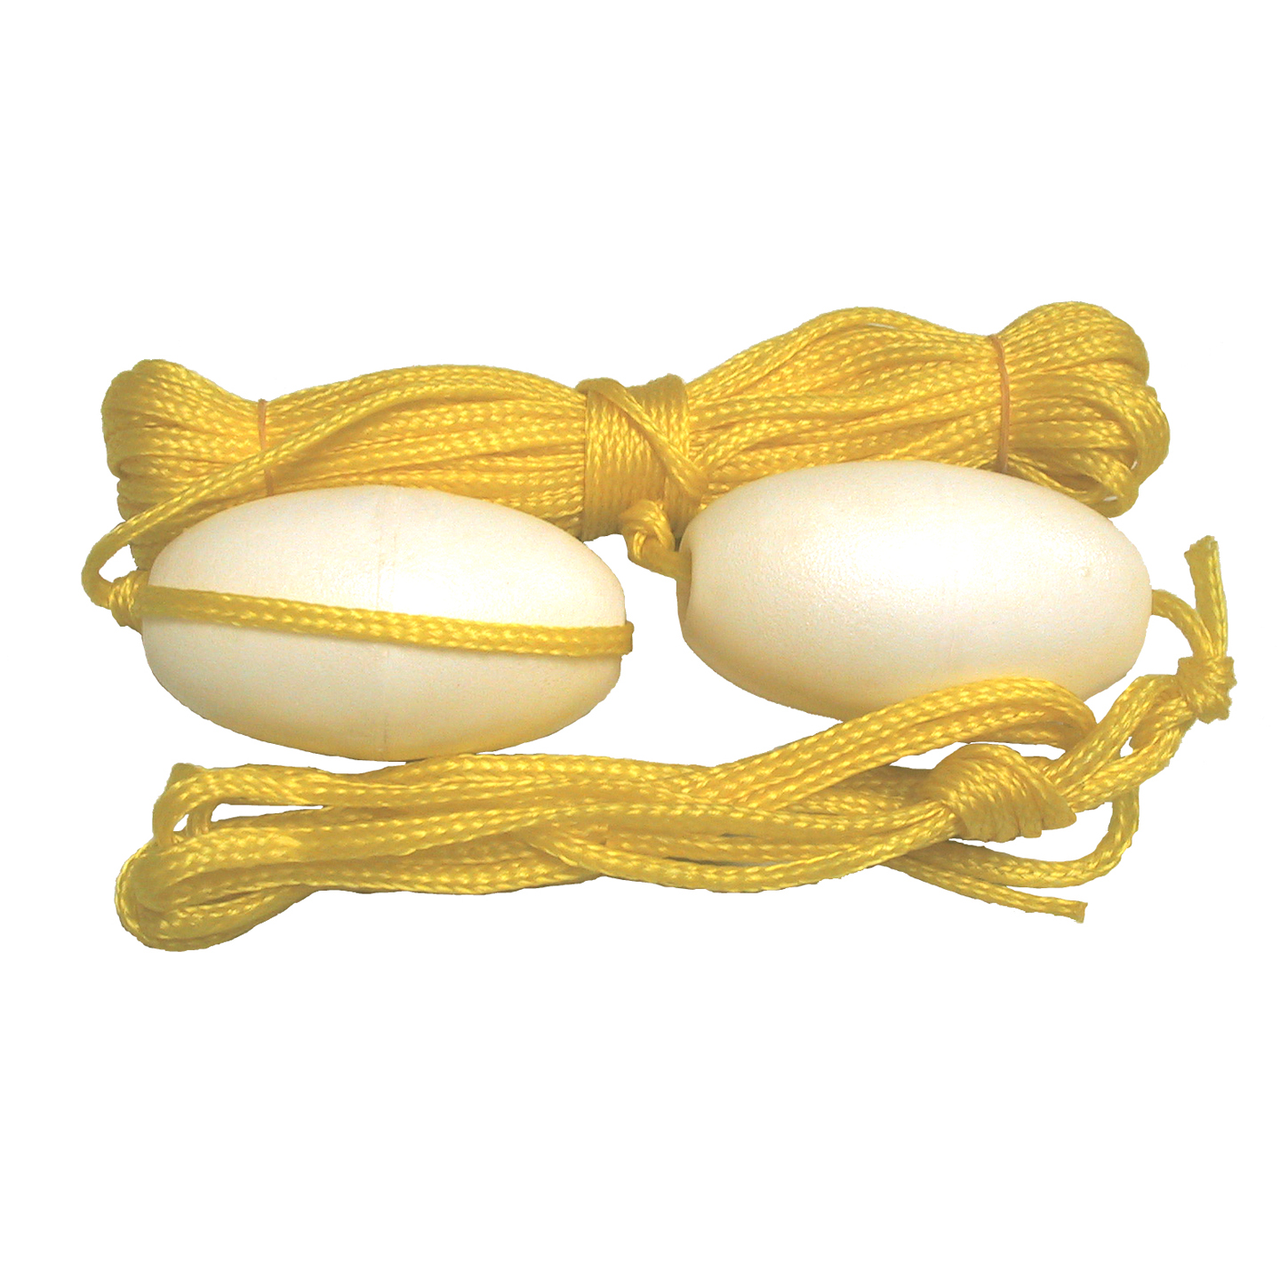 Promar Crab Net Harness Kit